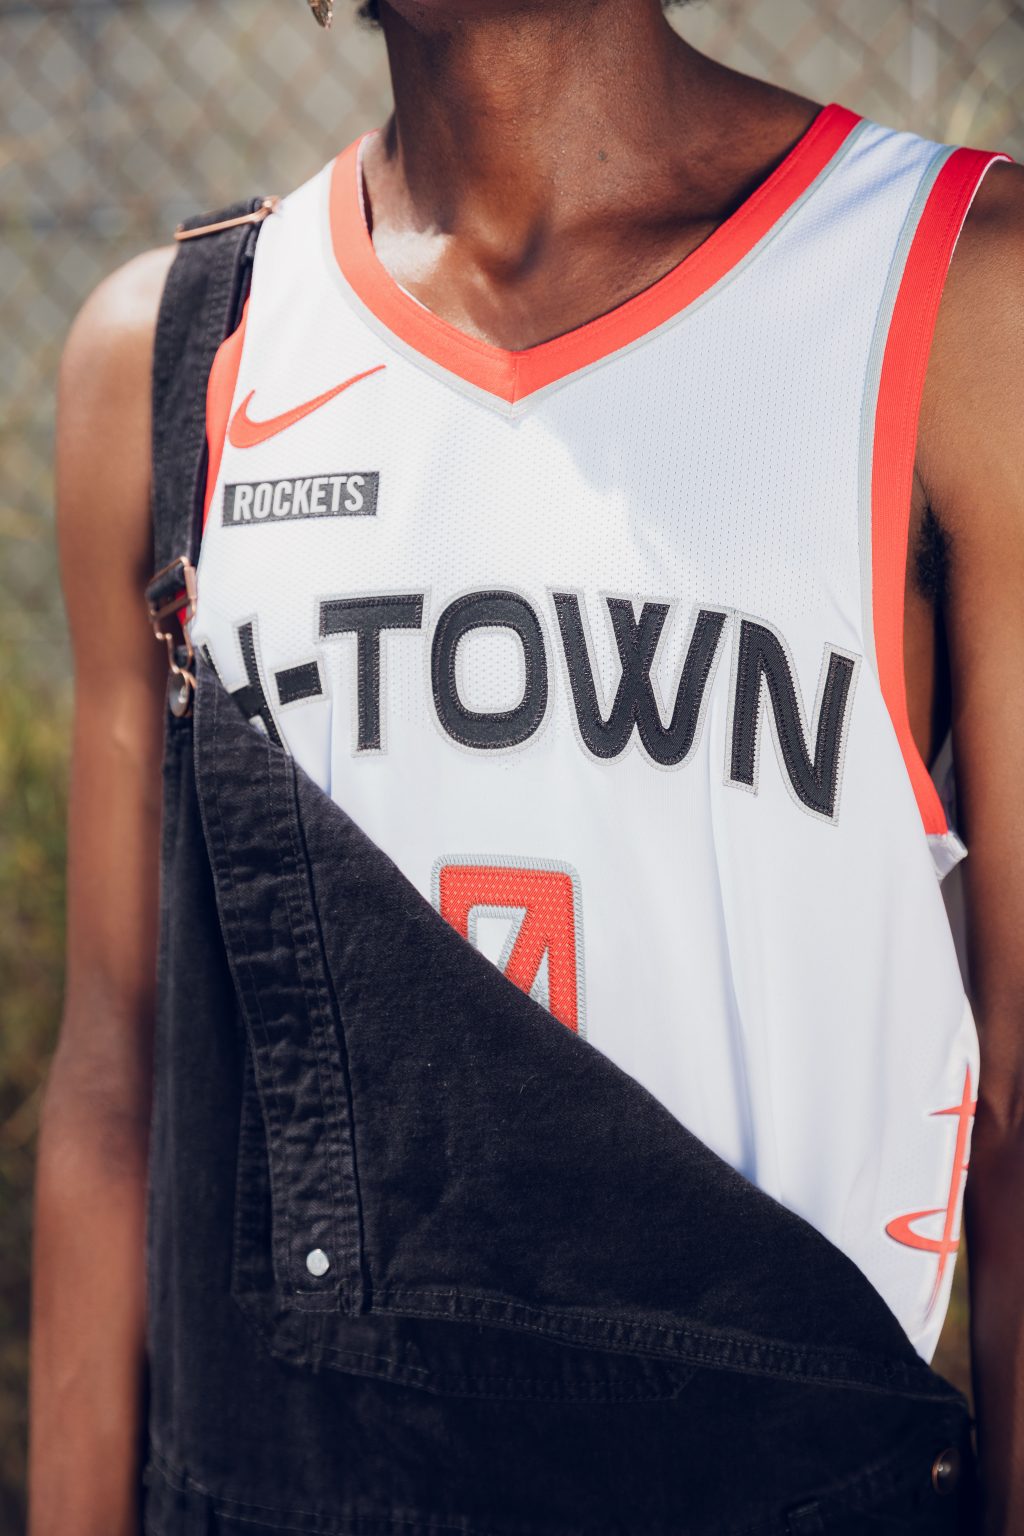 2019 nba city edition jerseys